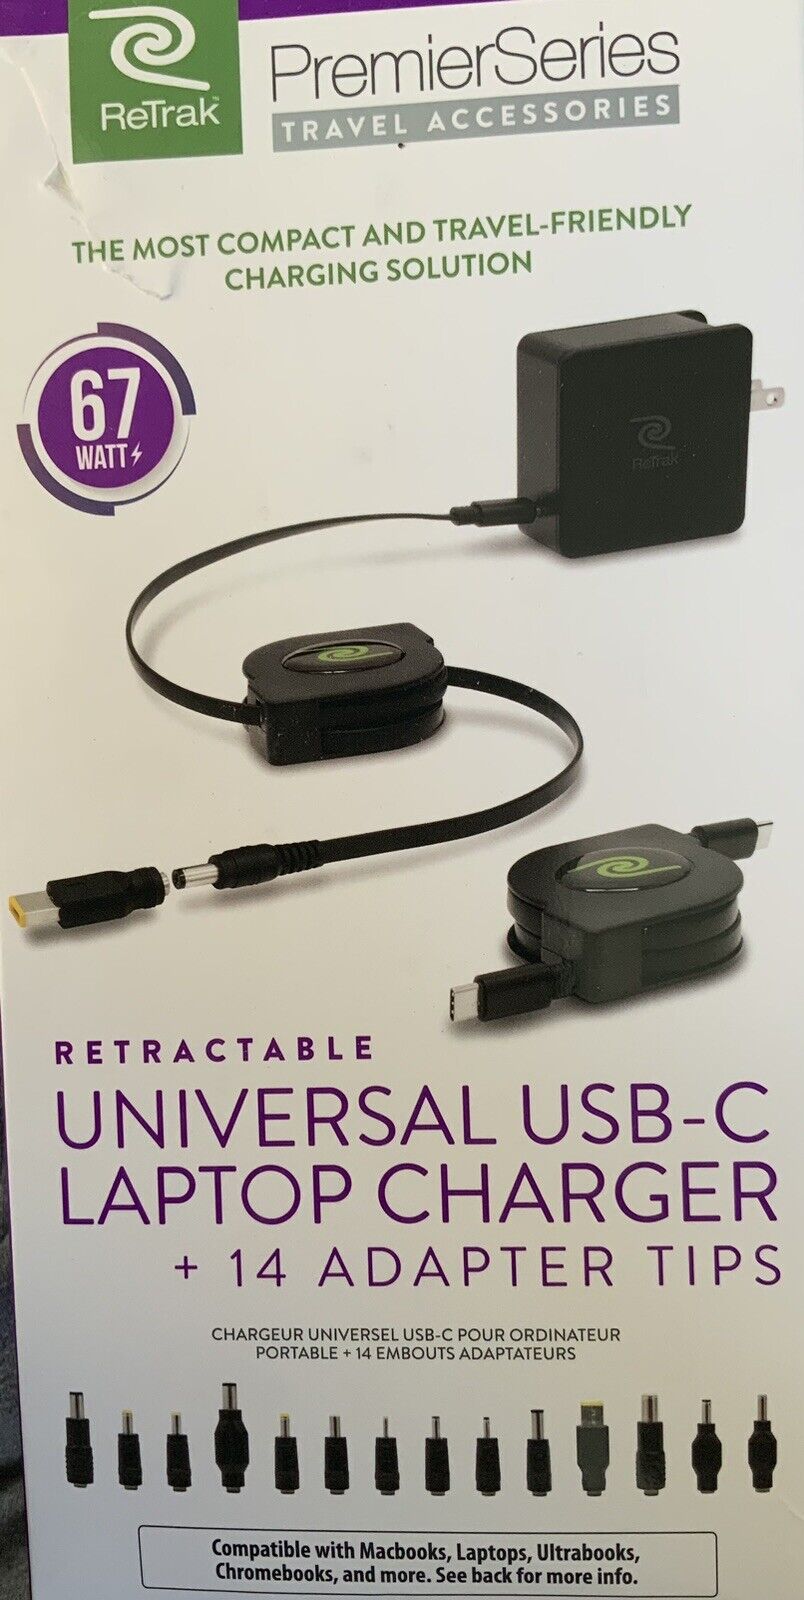 ReTrak - Retractable Universal USB-C Laptop Charger +14 Adapter Tips